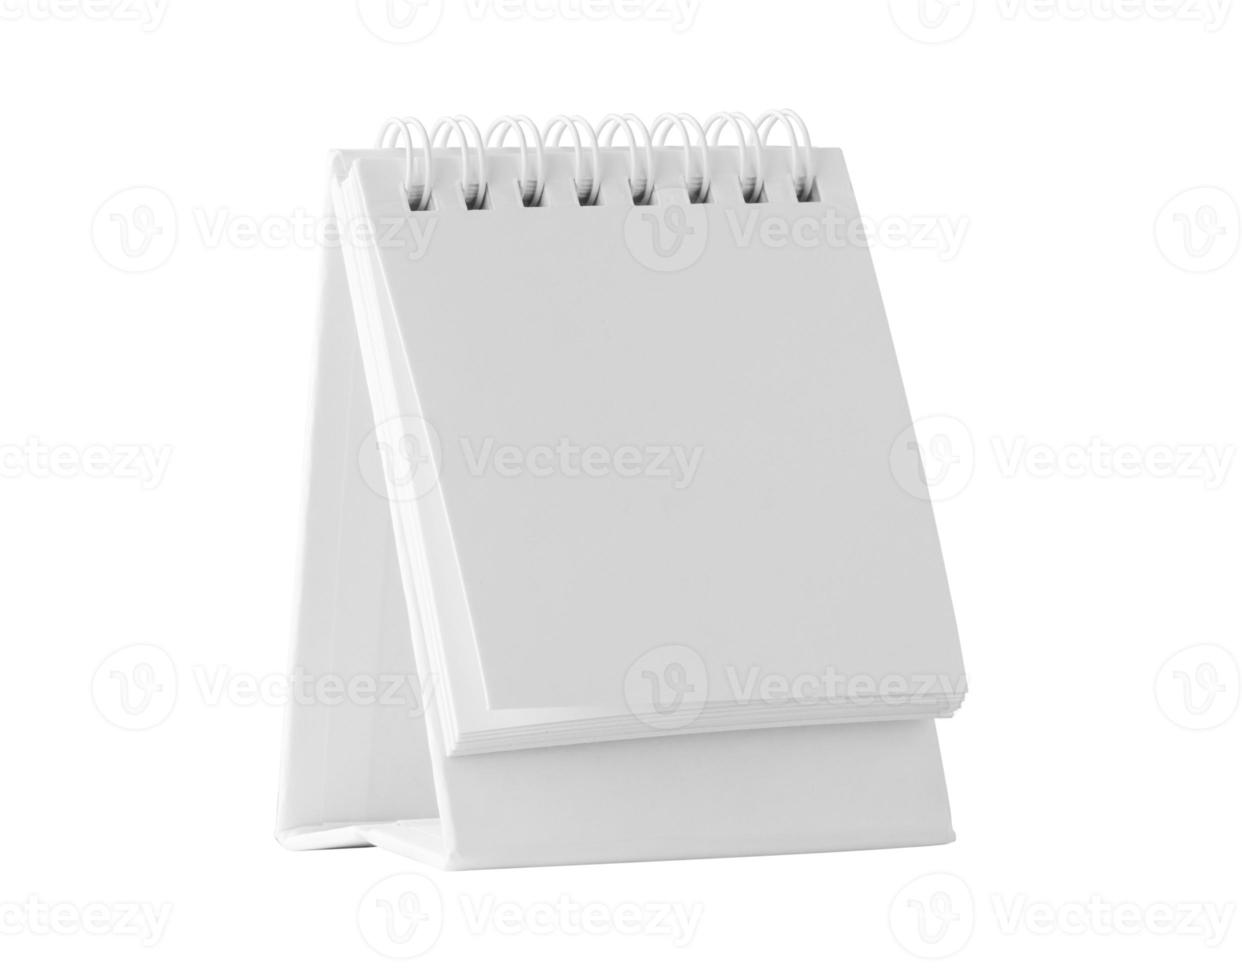 wit blanco papier bureau kalender mockup geïsoleerd Aan wit achtergrond met knipsel pad foto